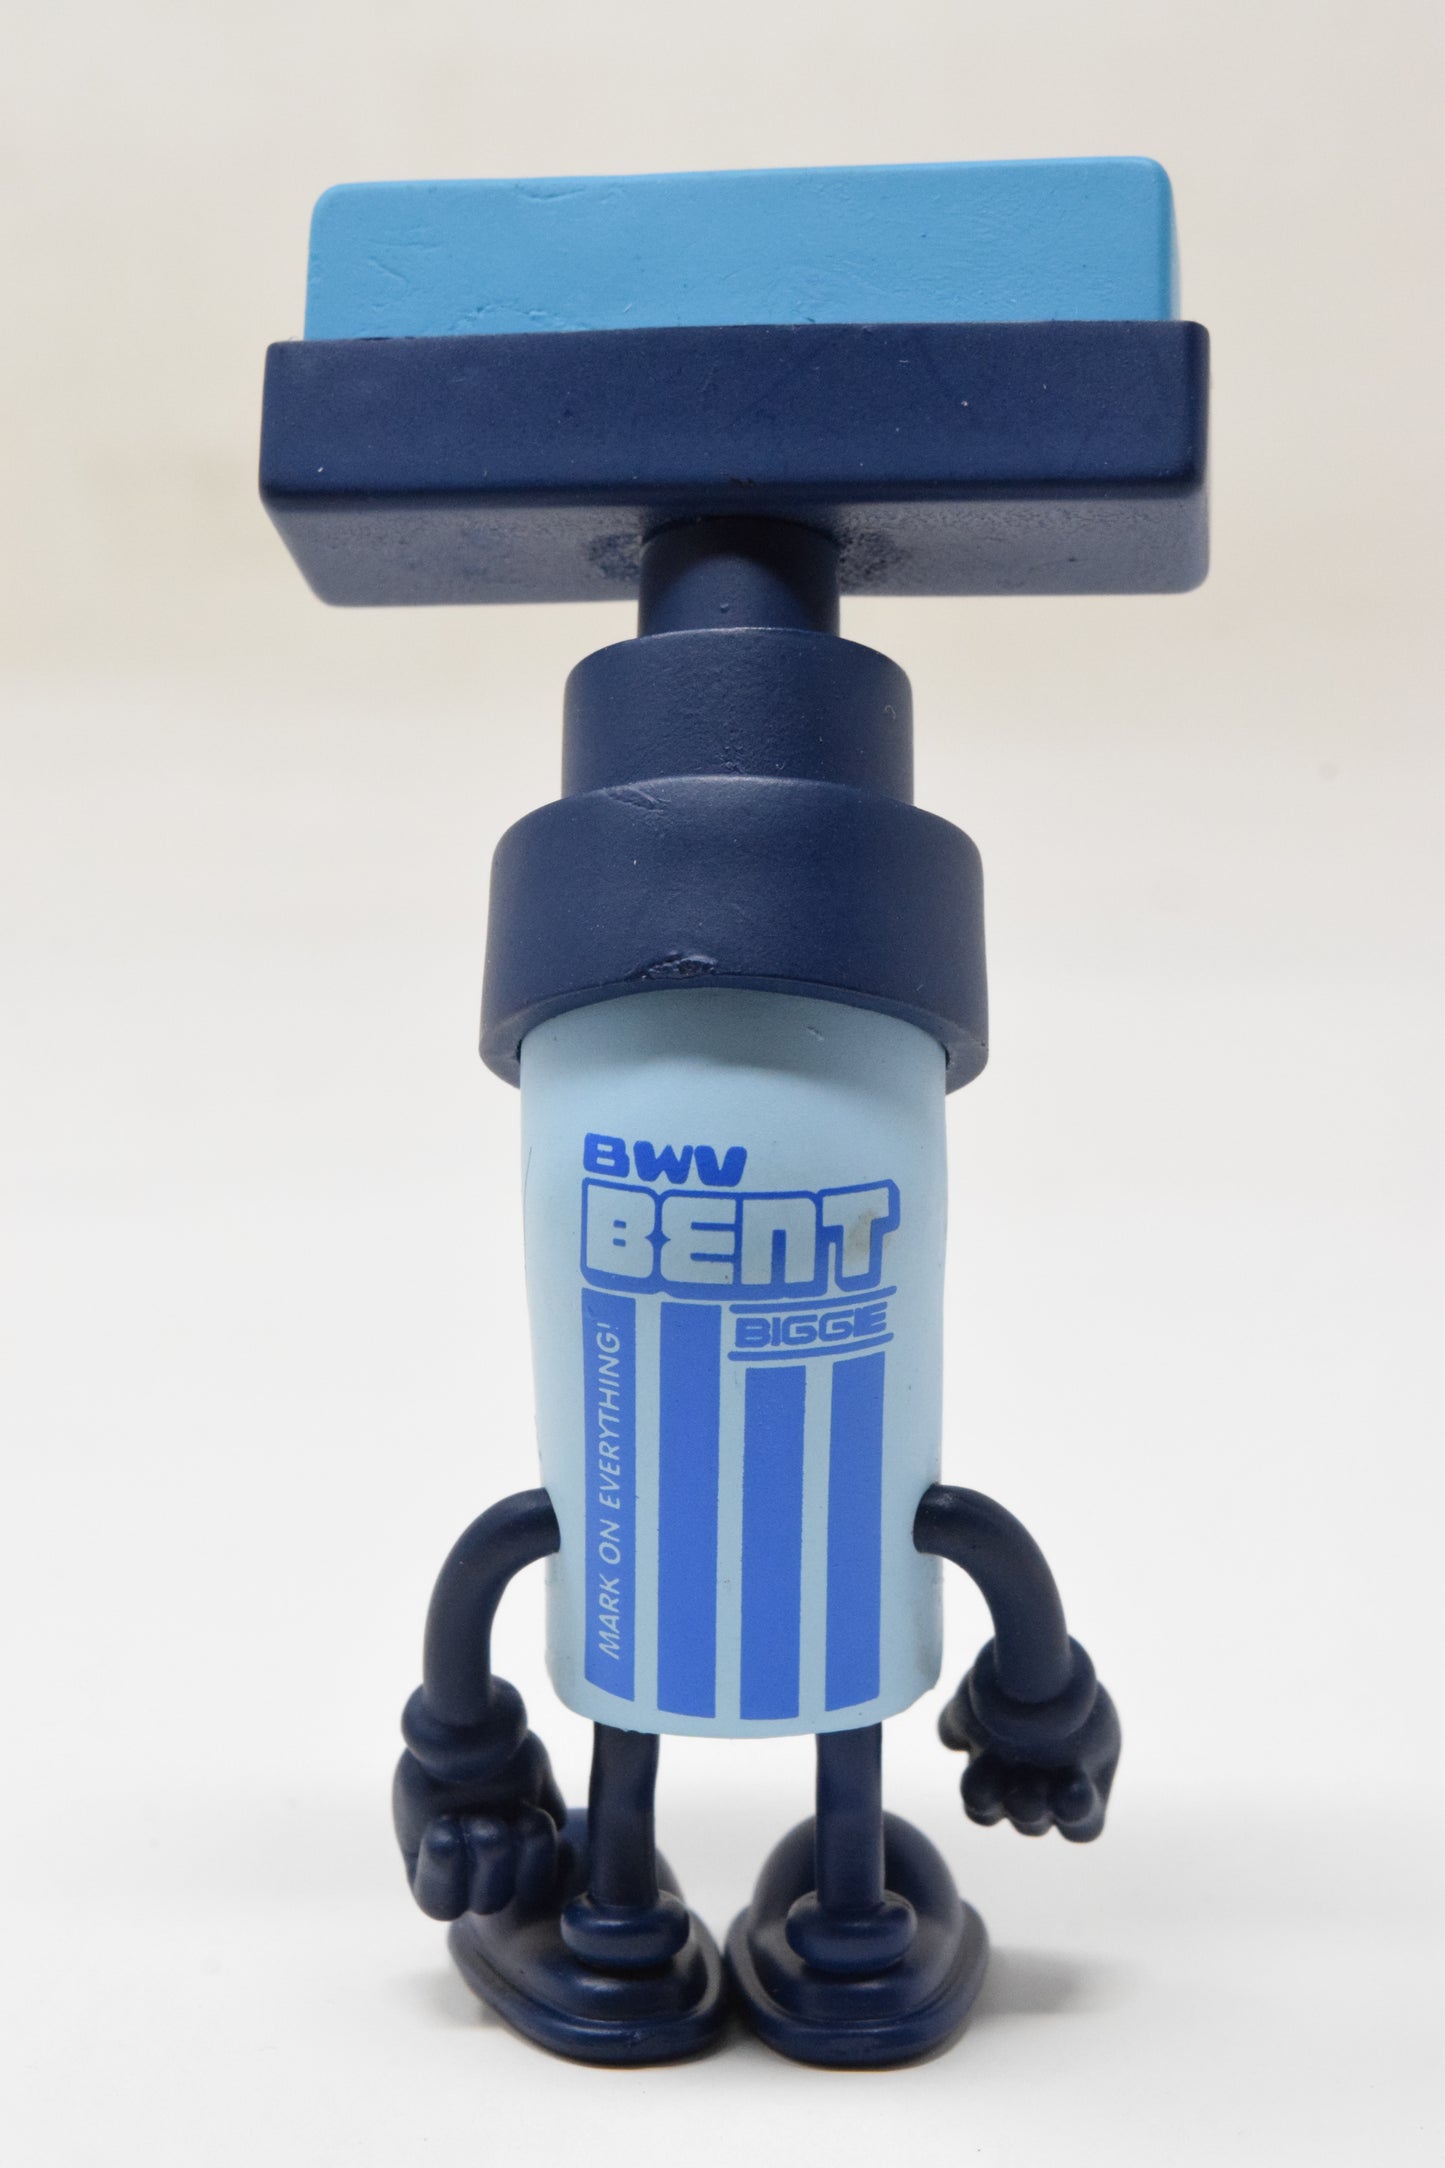 Kidrobot Bentworld Vandals Mad Biggie New Vinyl Figure Spray Paint